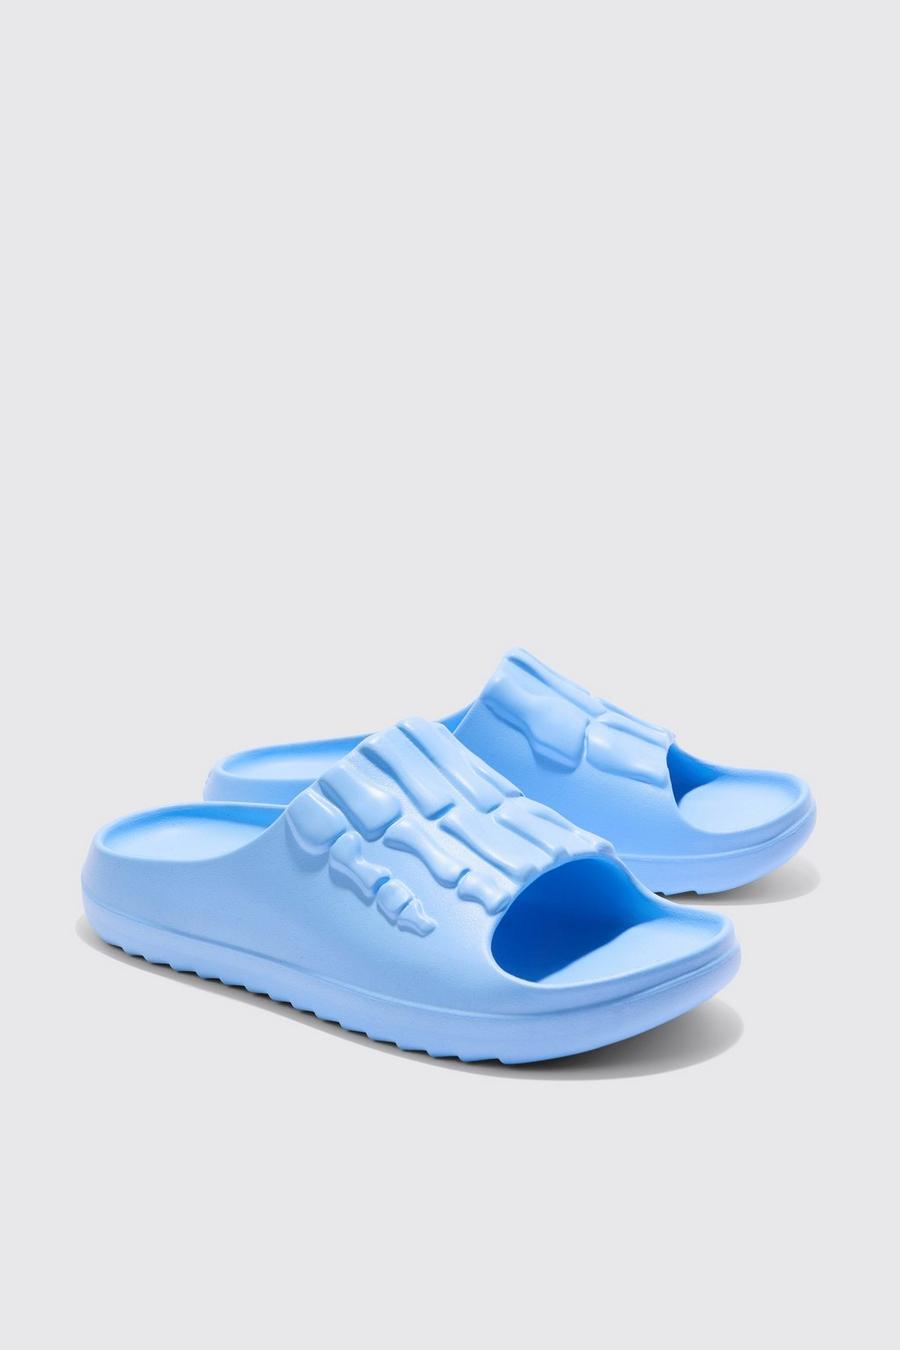 Light blue zapatillas de running Under Armour neutro ritmo medio pie normal talla 46 baratas menos de 60